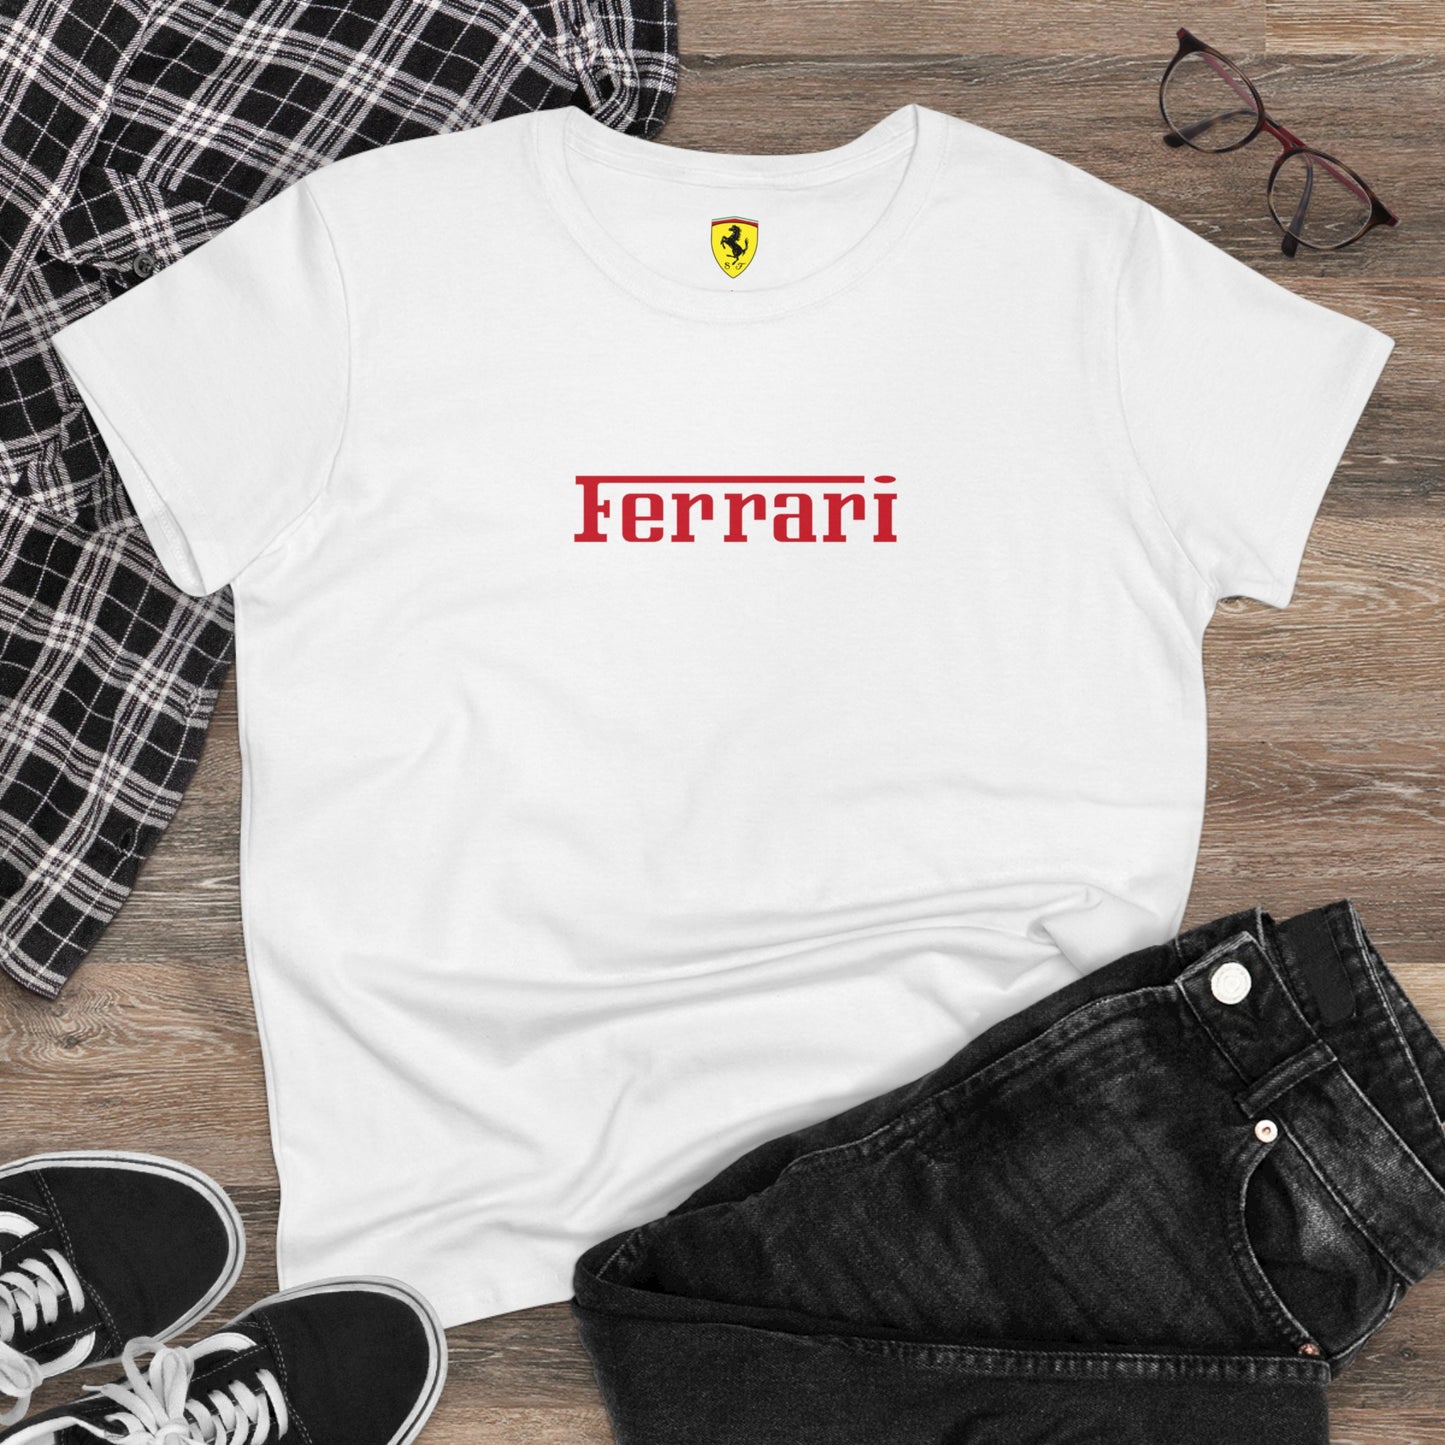 Ferrari Logo Semi - Fitted Women's Tee  - Classic Style - 100% Cotton - Pre-Shrunk